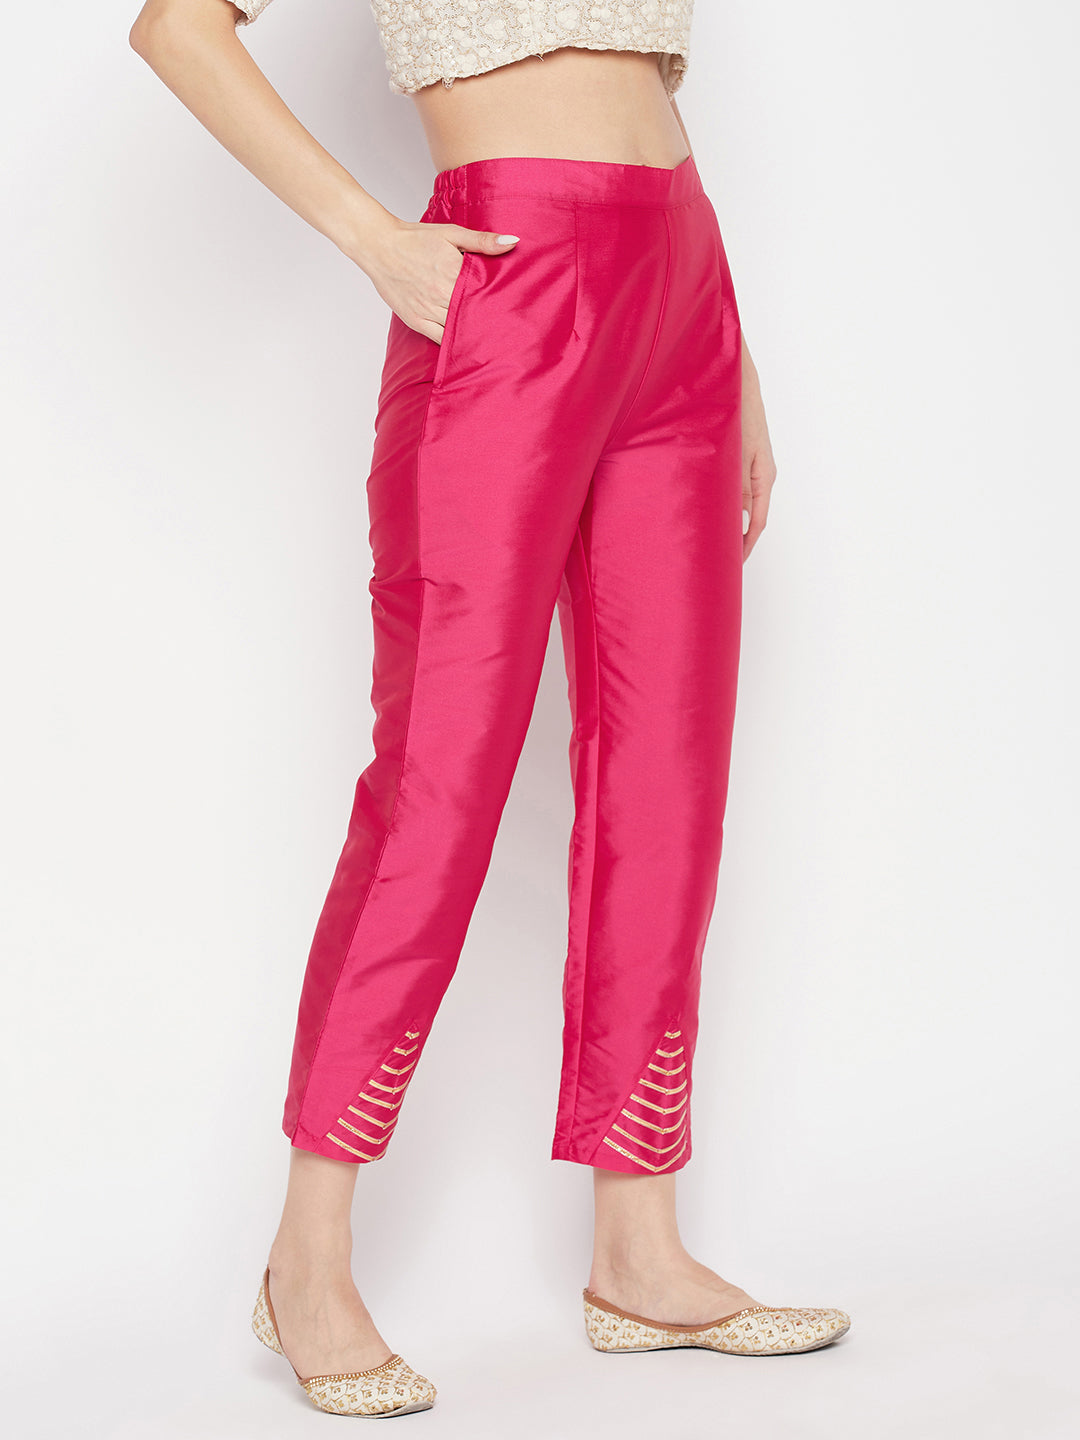 Clora Magenta Solid Taffeta Silk Trouser